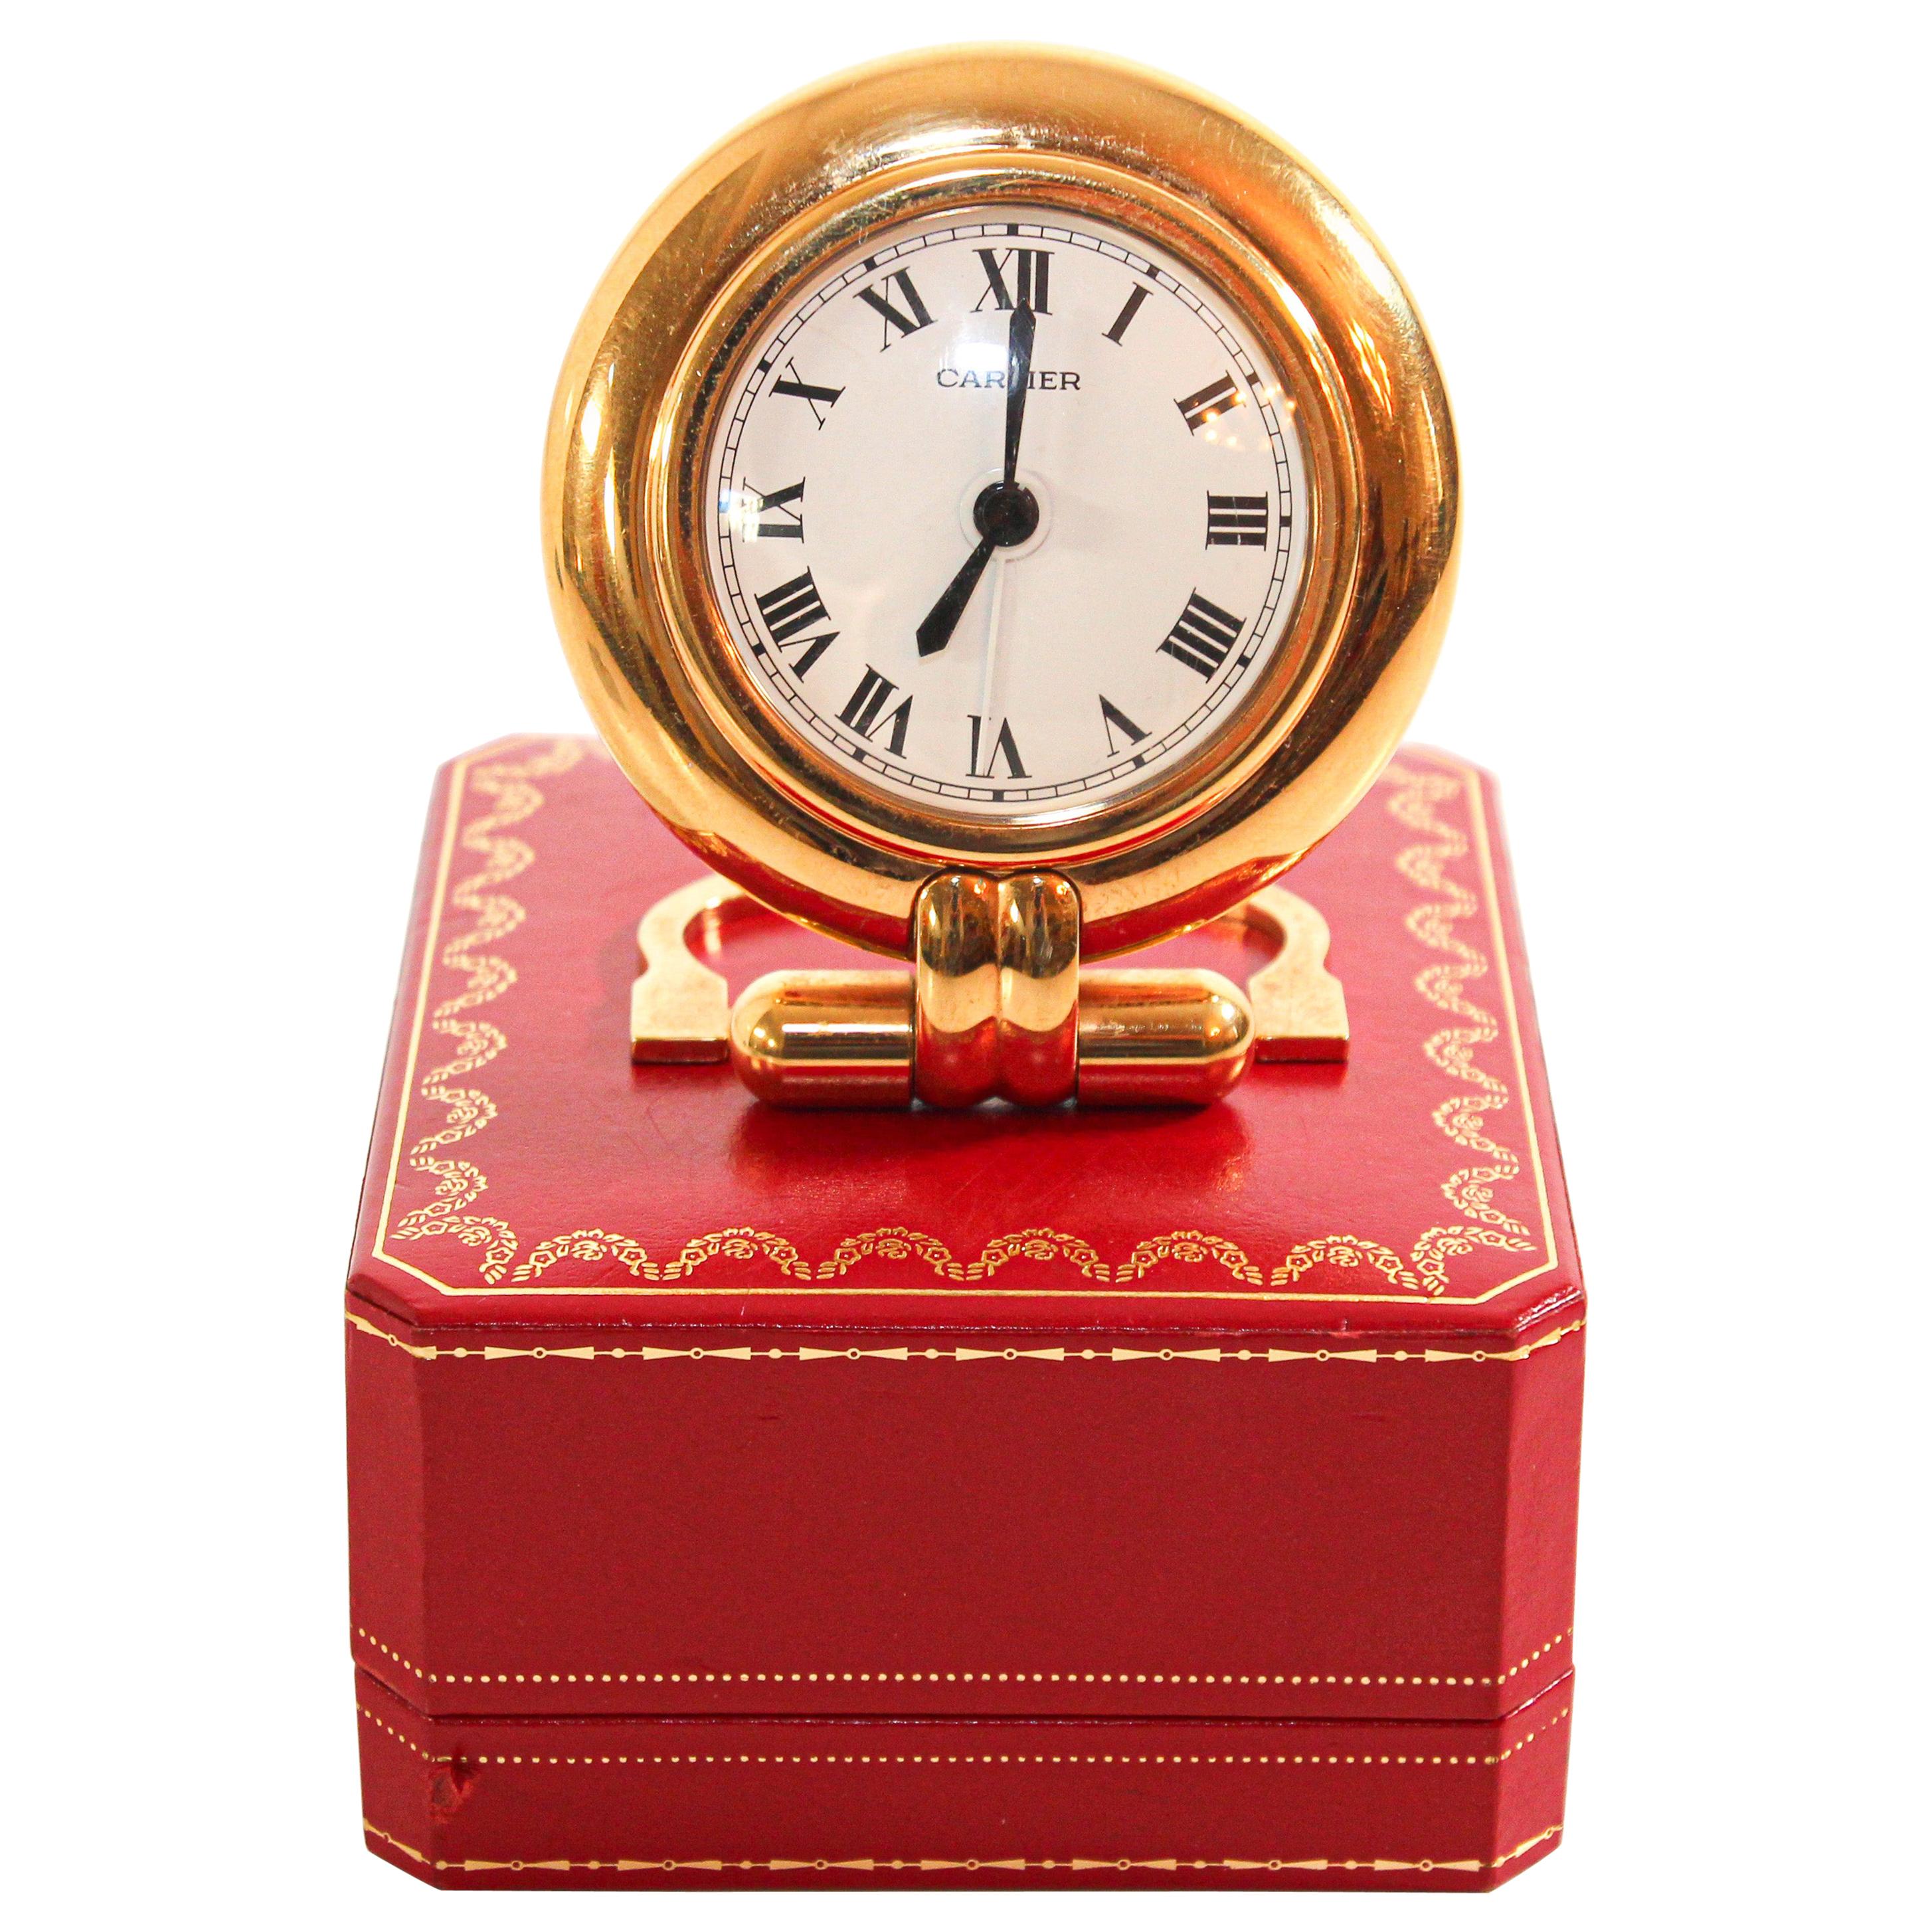 Cartier Colisee Art Deco Travel Desk Clock 24-Karat Gold-Plated